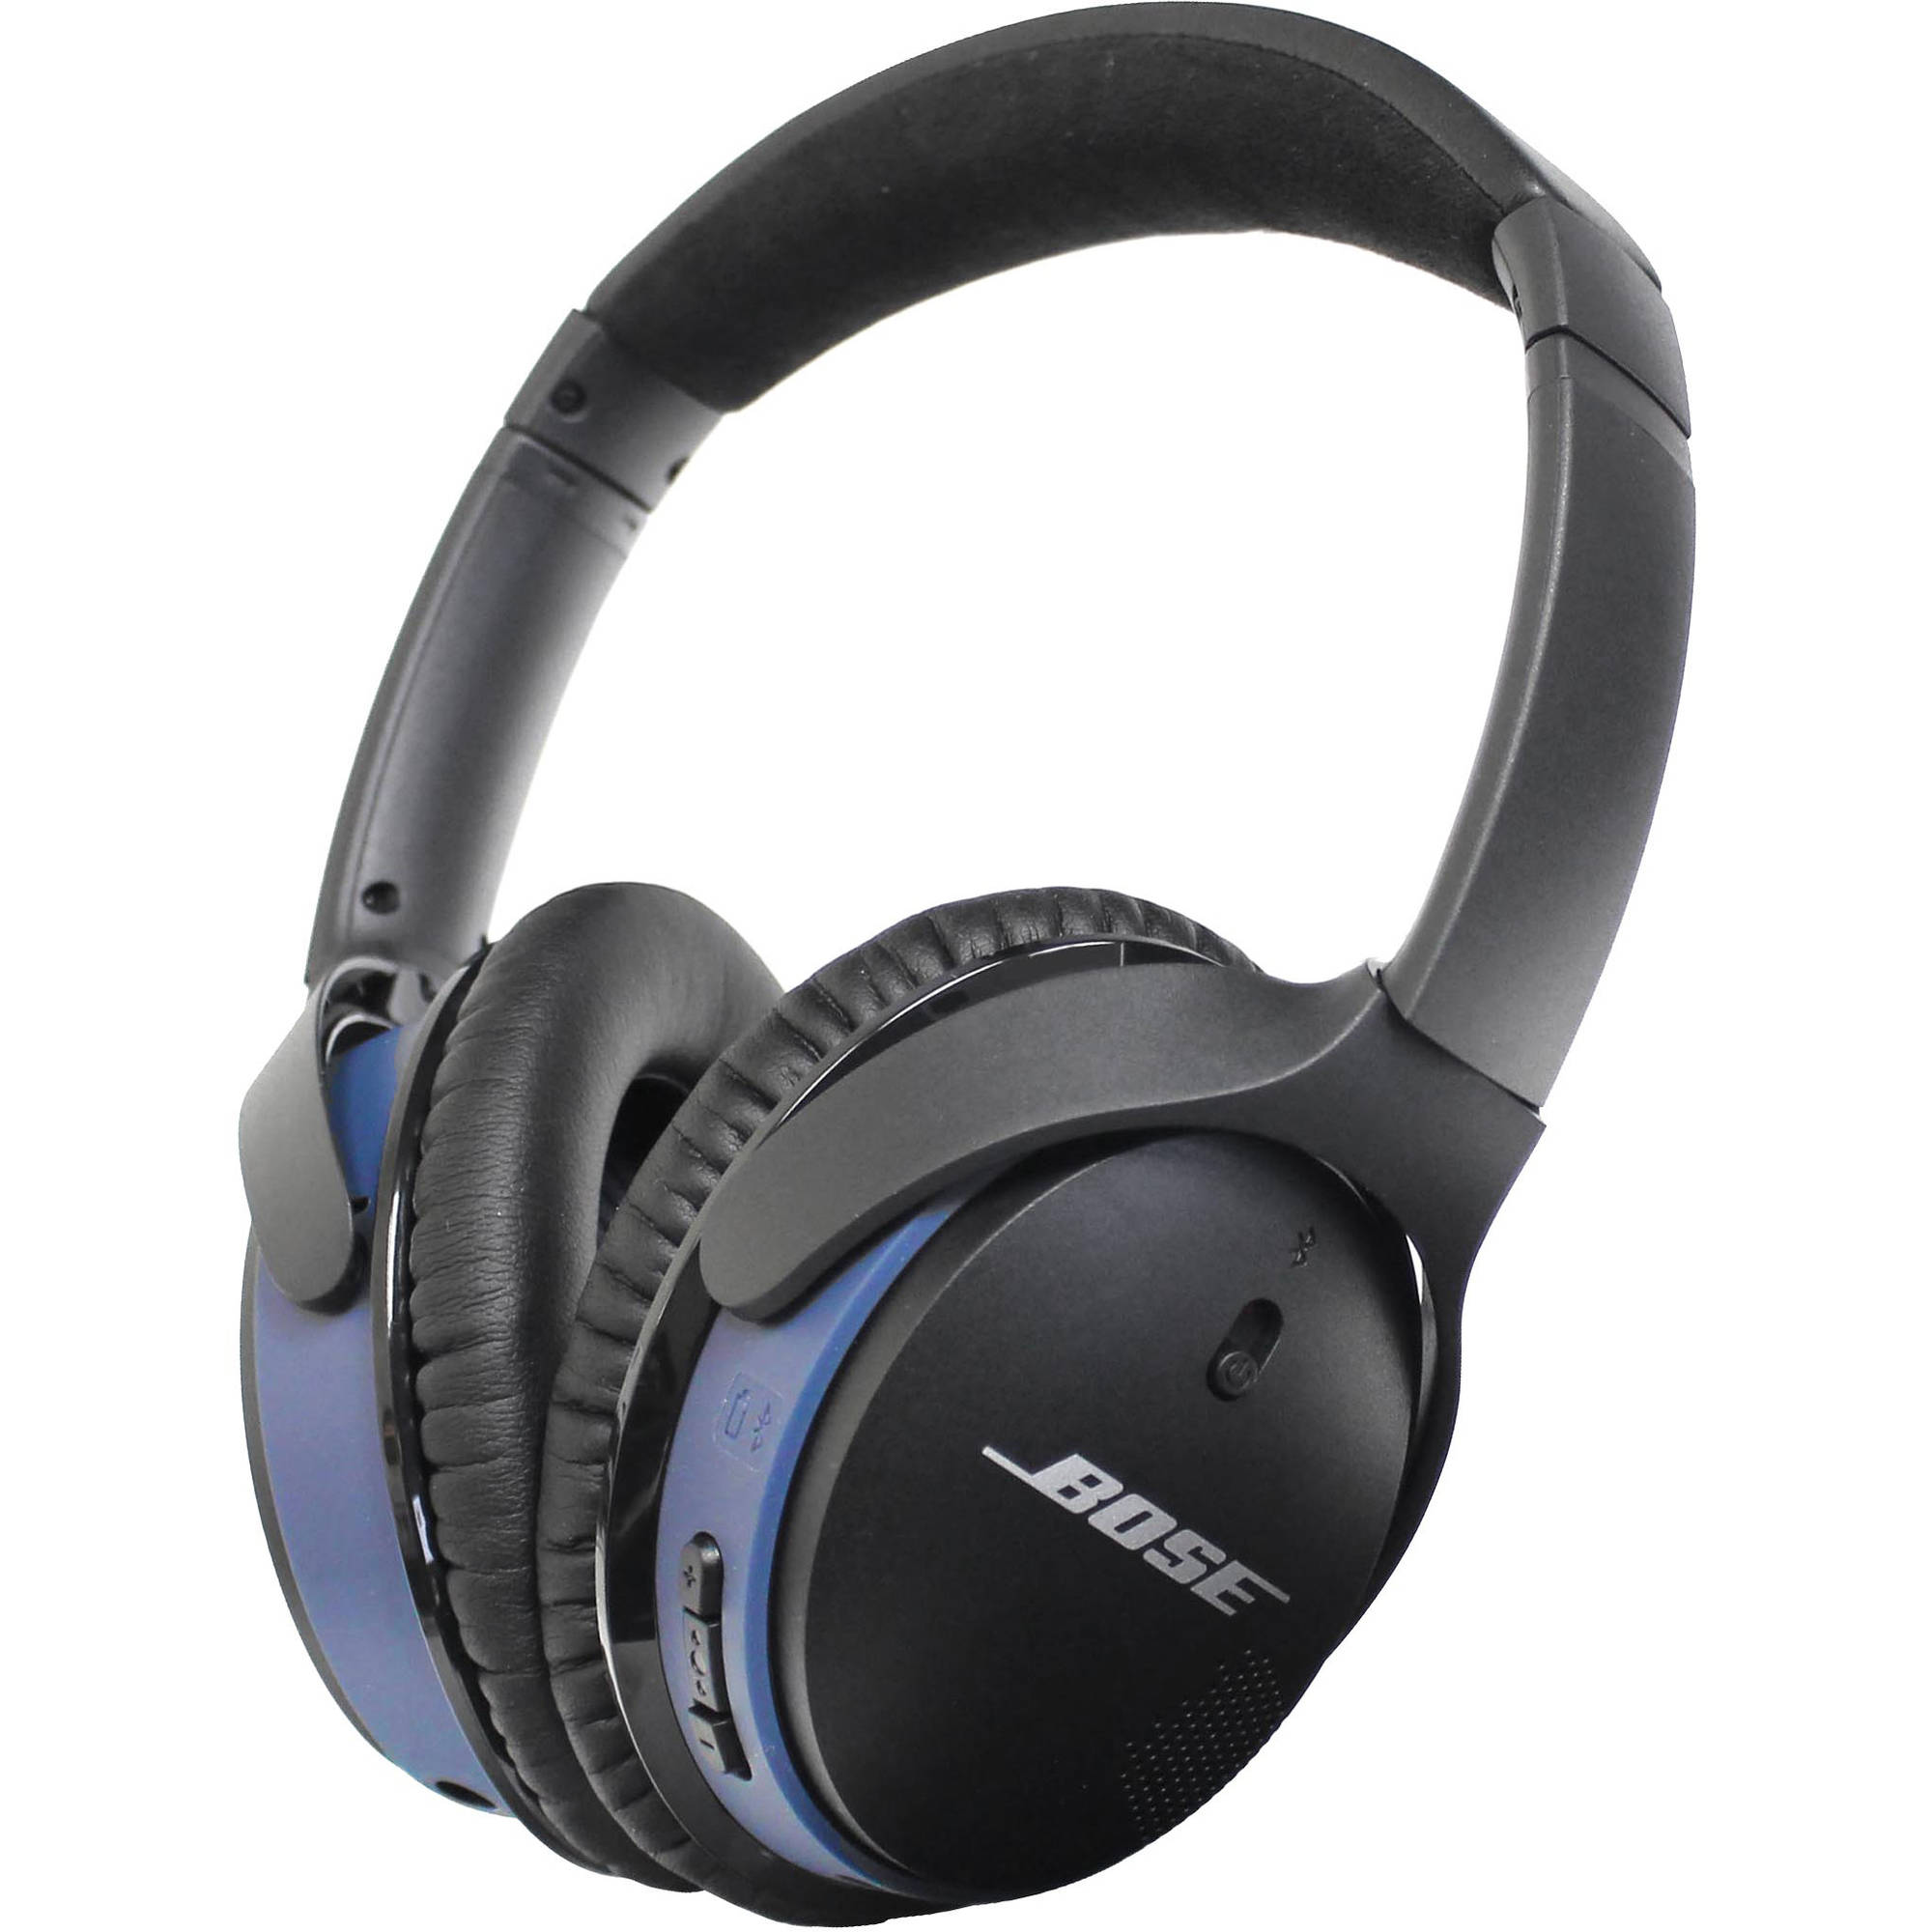 Bose SoundLink Around Ear Wireless Bluetooth Headphones II, Black - image 3 of 5